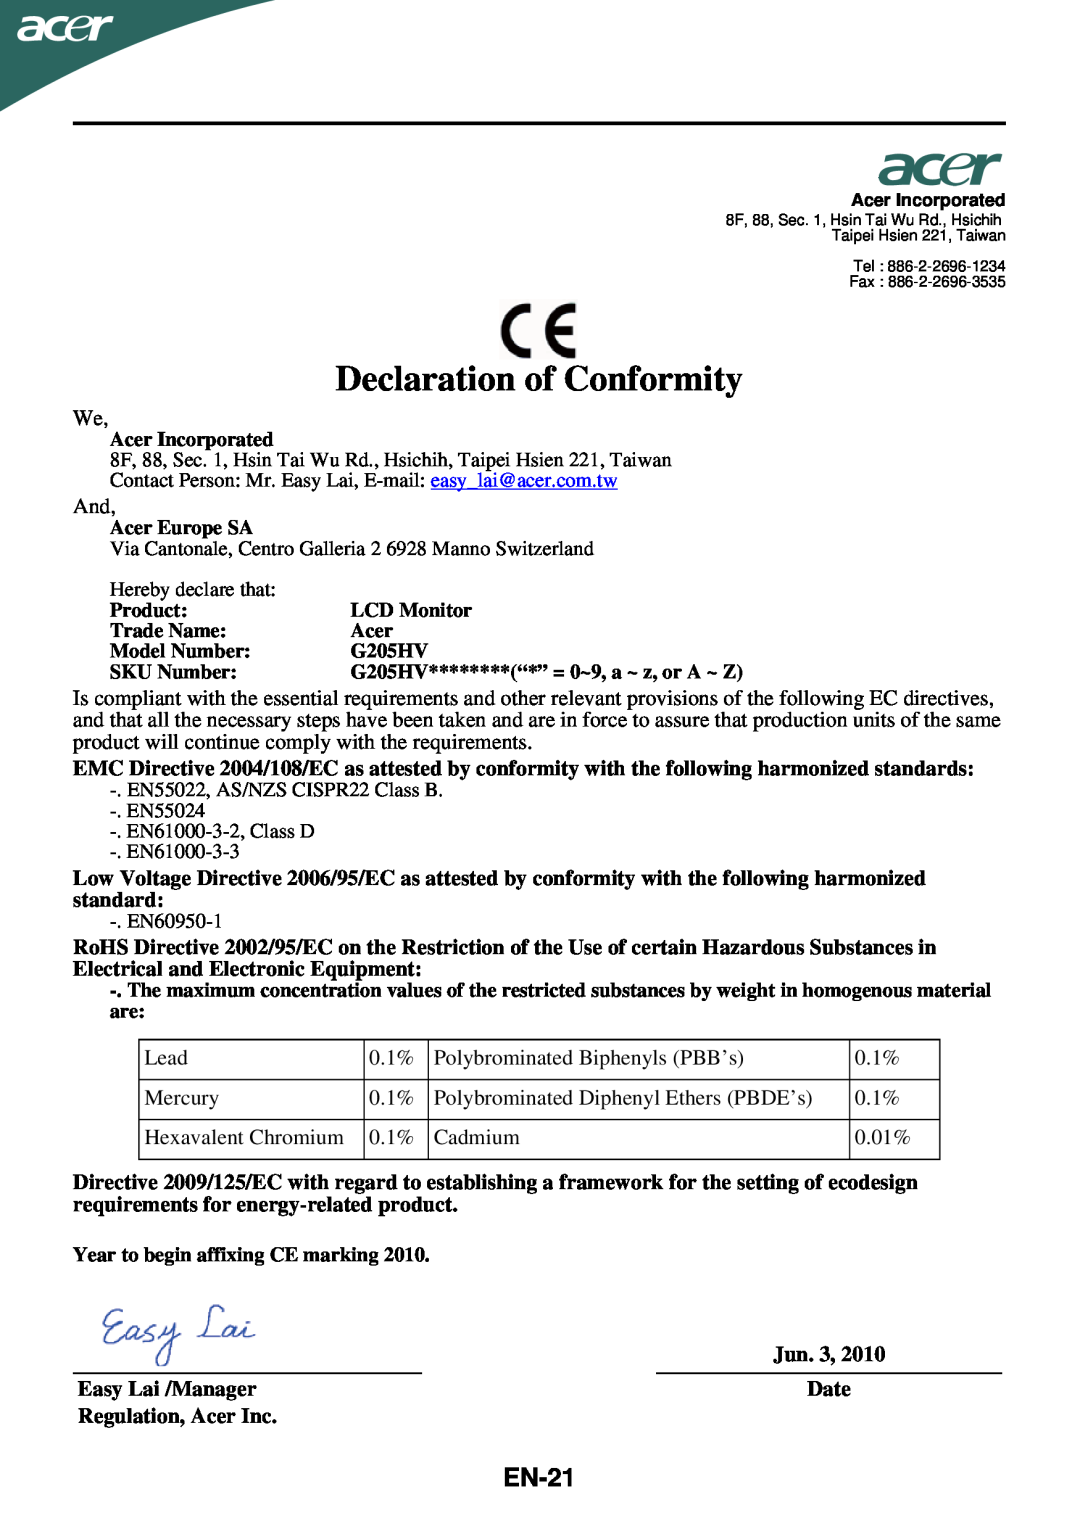 Acer G205HV manual Declaration of Conformity, EN-21 